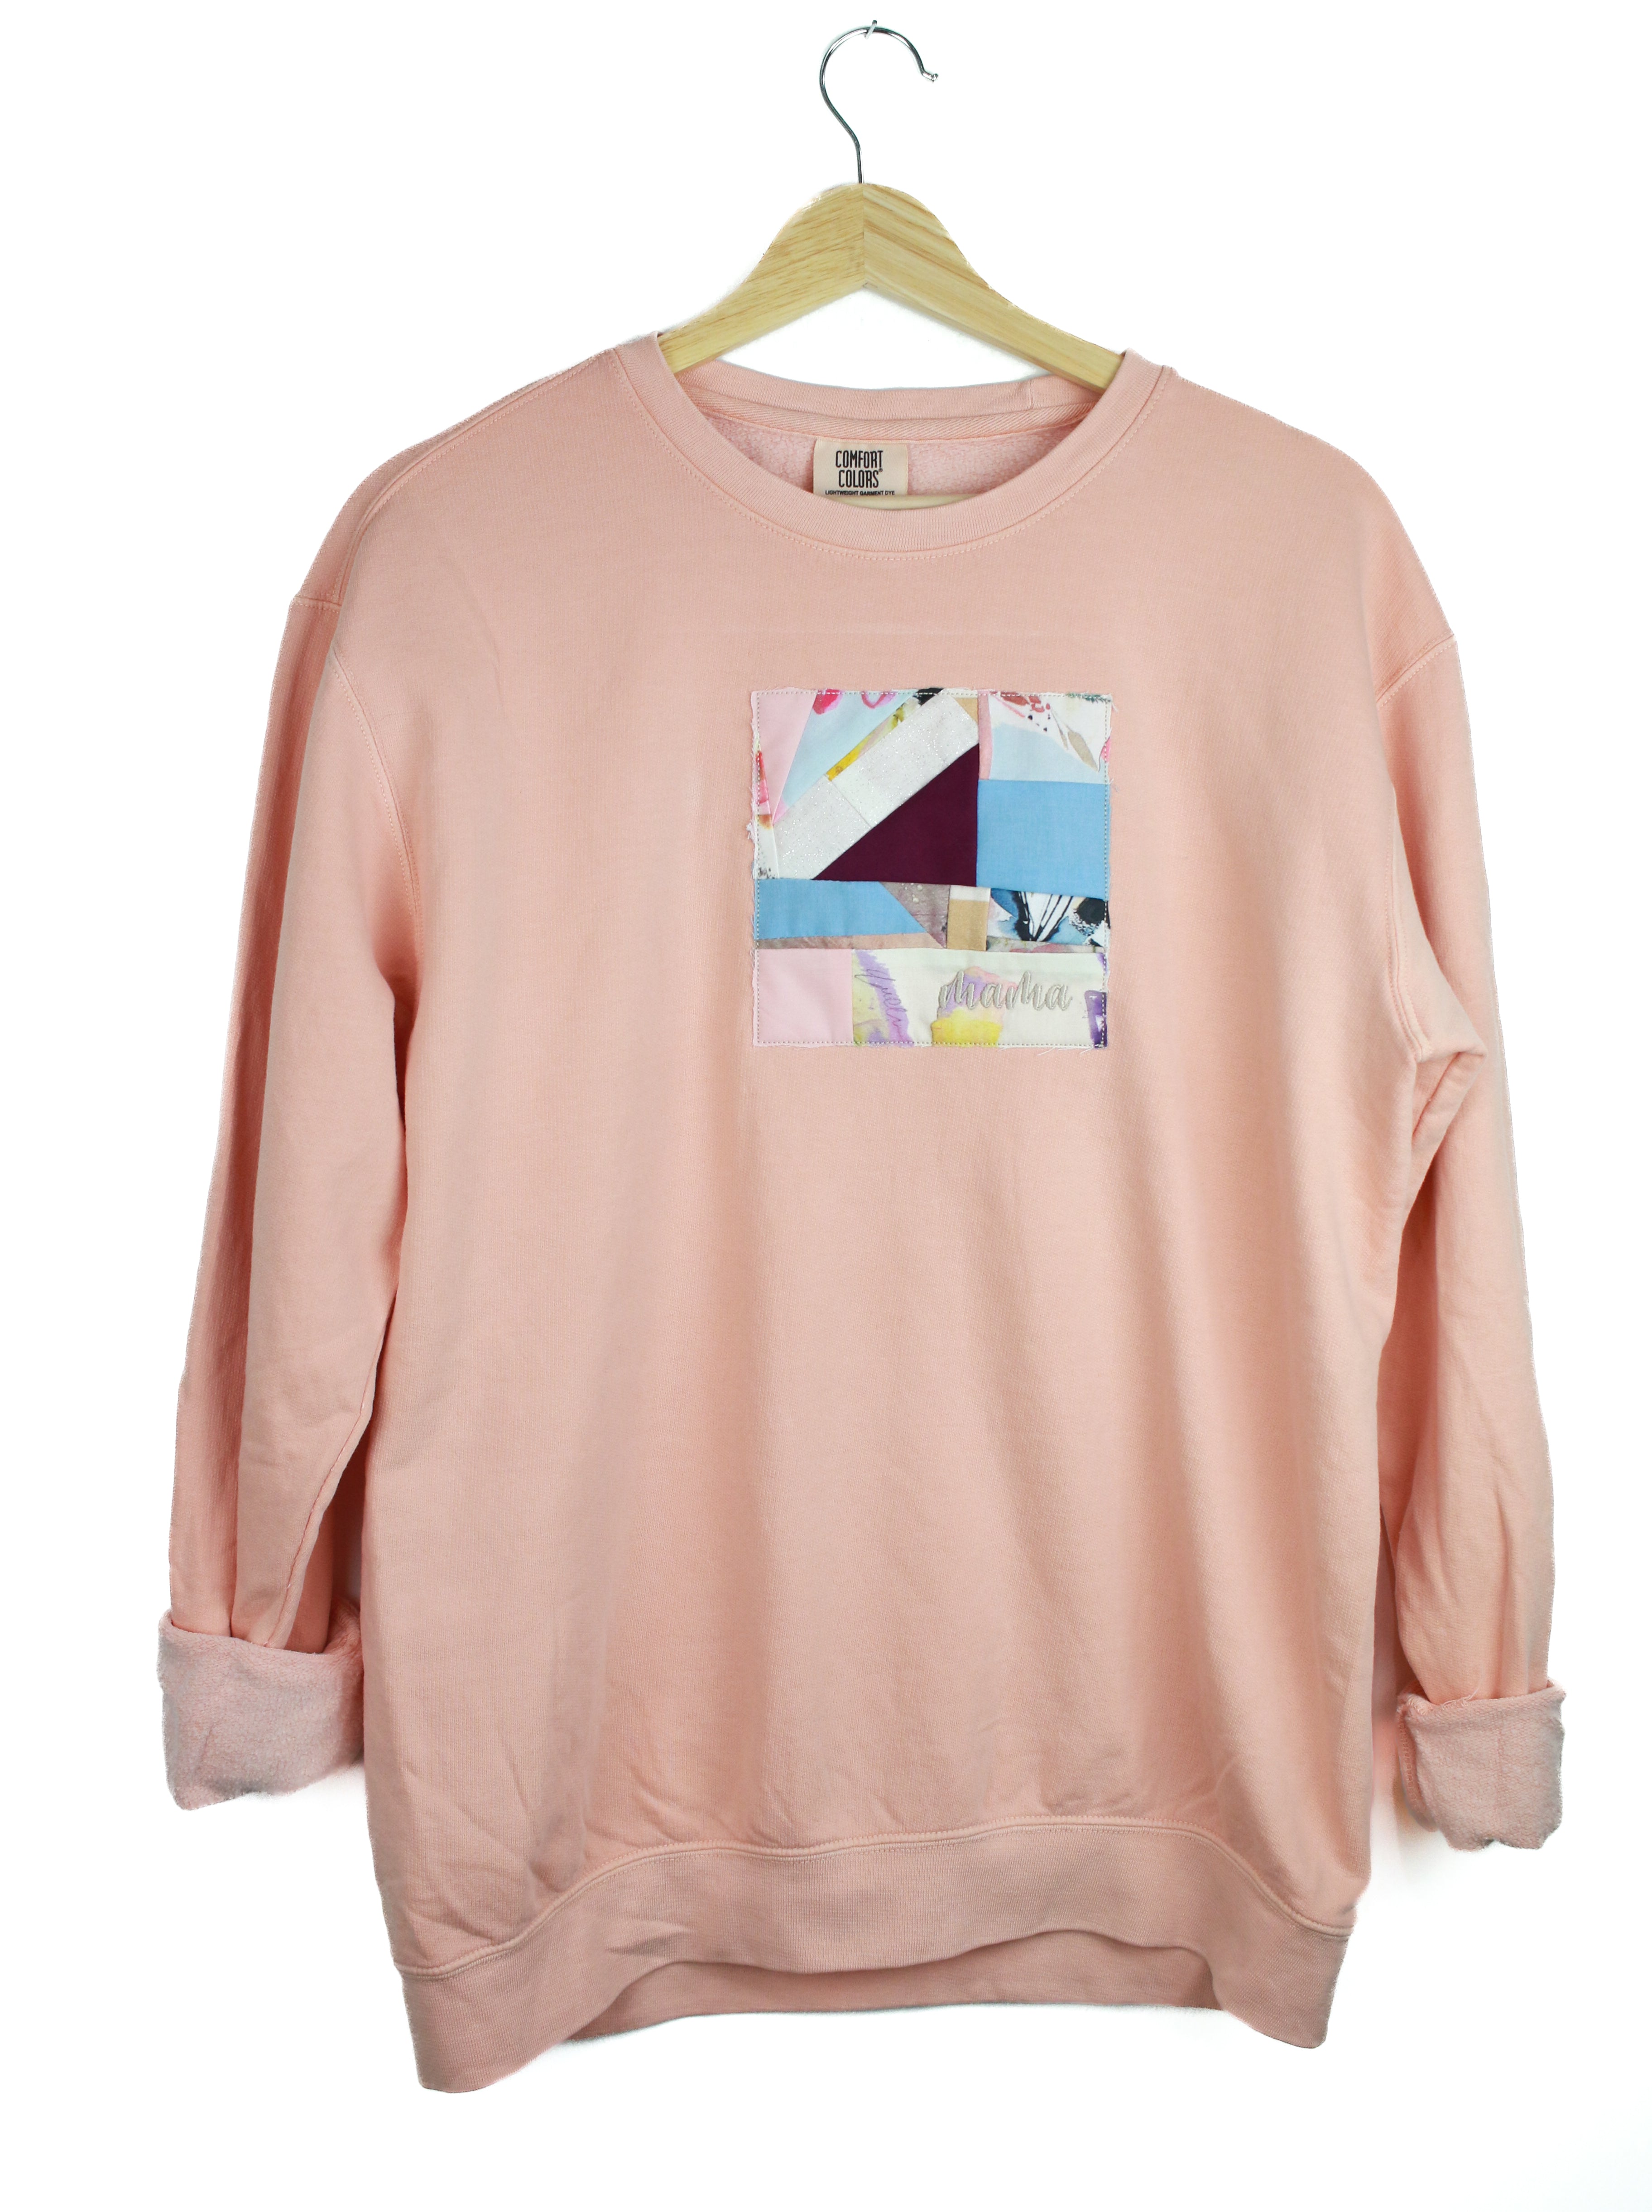 Breezy Lightweight Blush Sweatshirt (Size S)